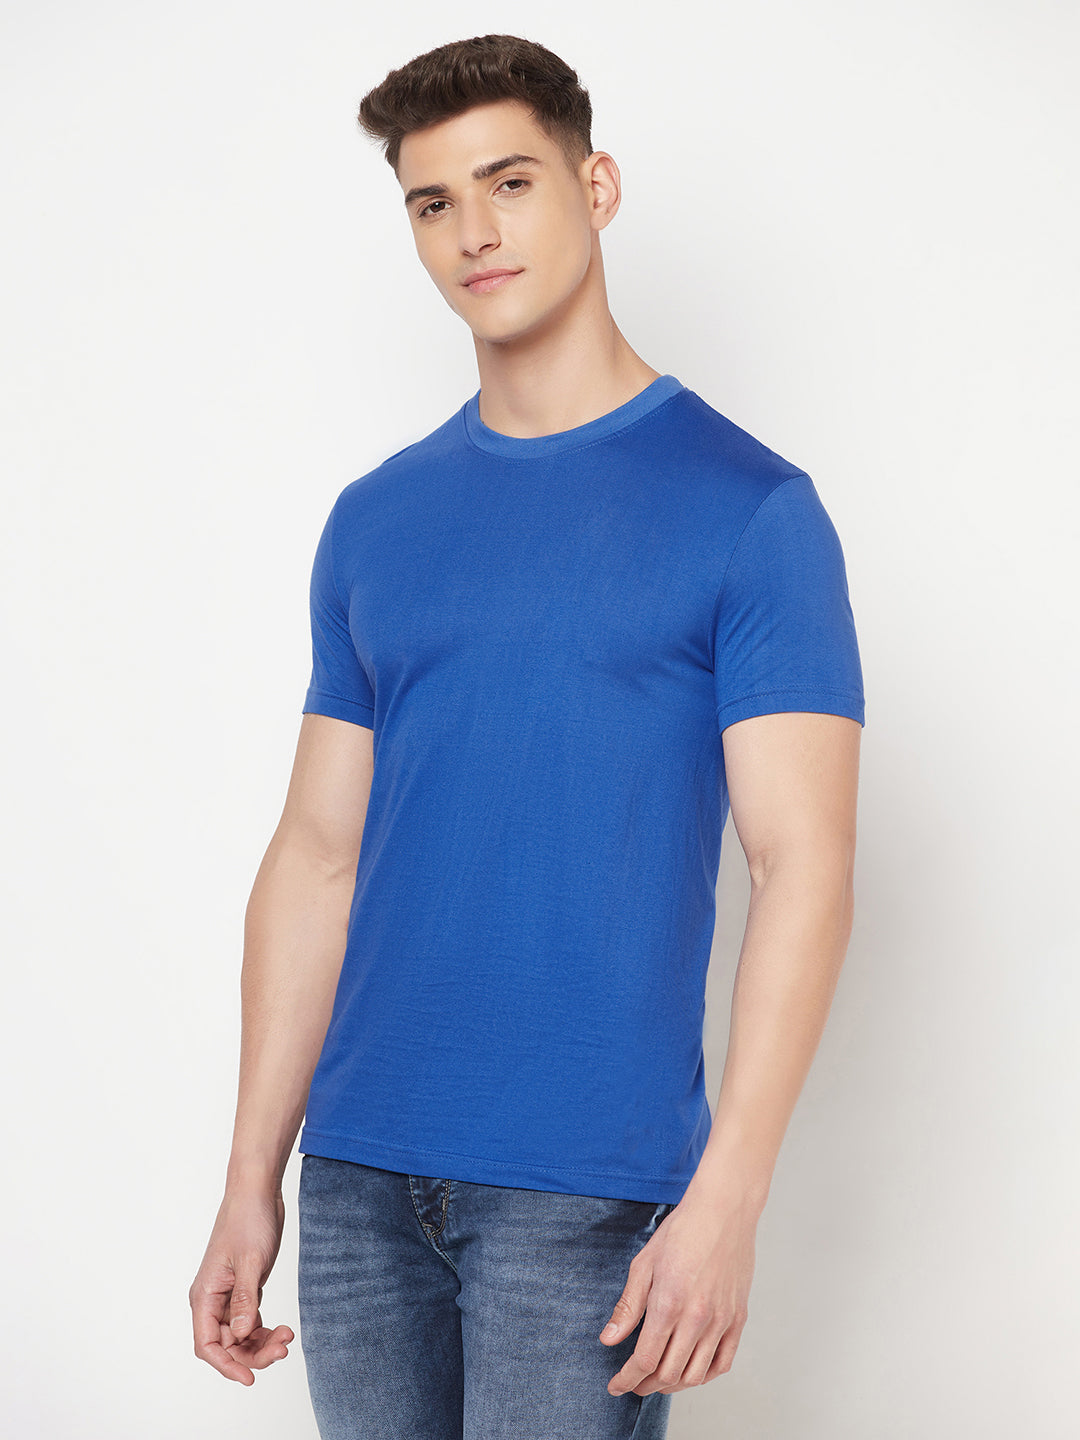 Premium Cotton Tshirts  (Pack of 2- Black,Blue)